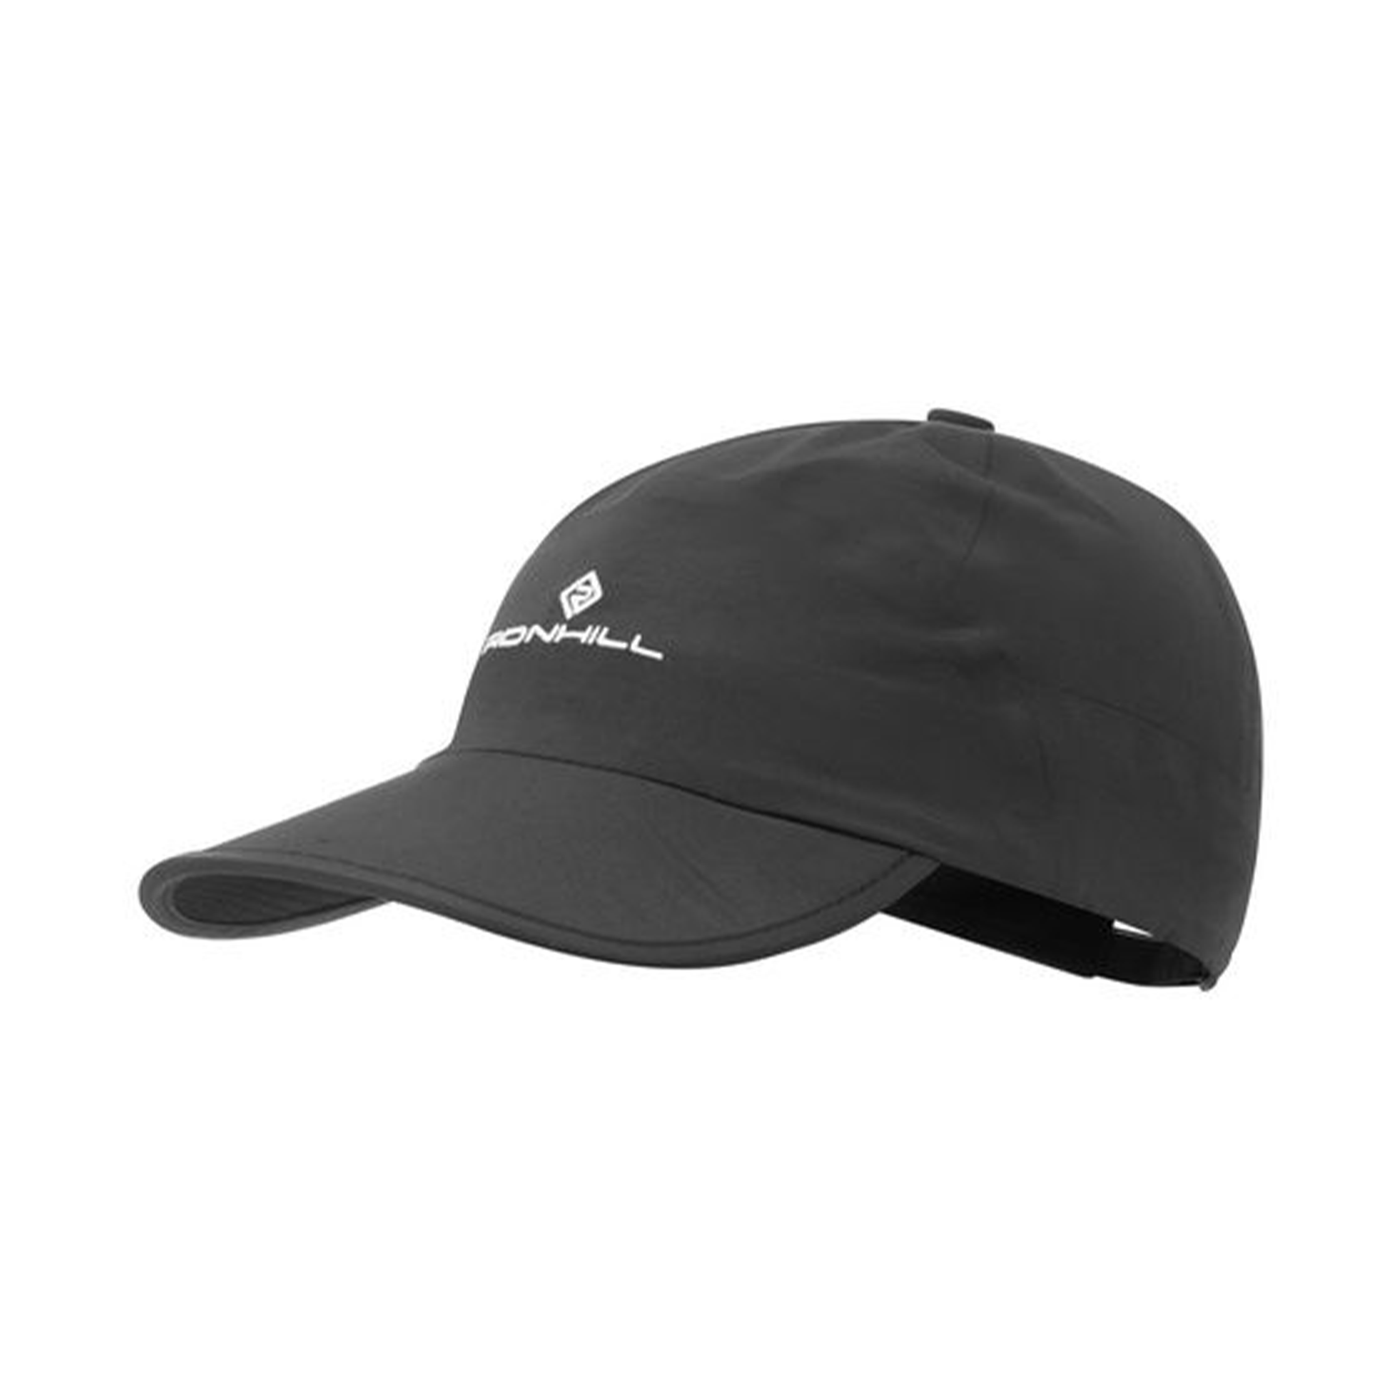 RonHill Sunlight Cap - All Black